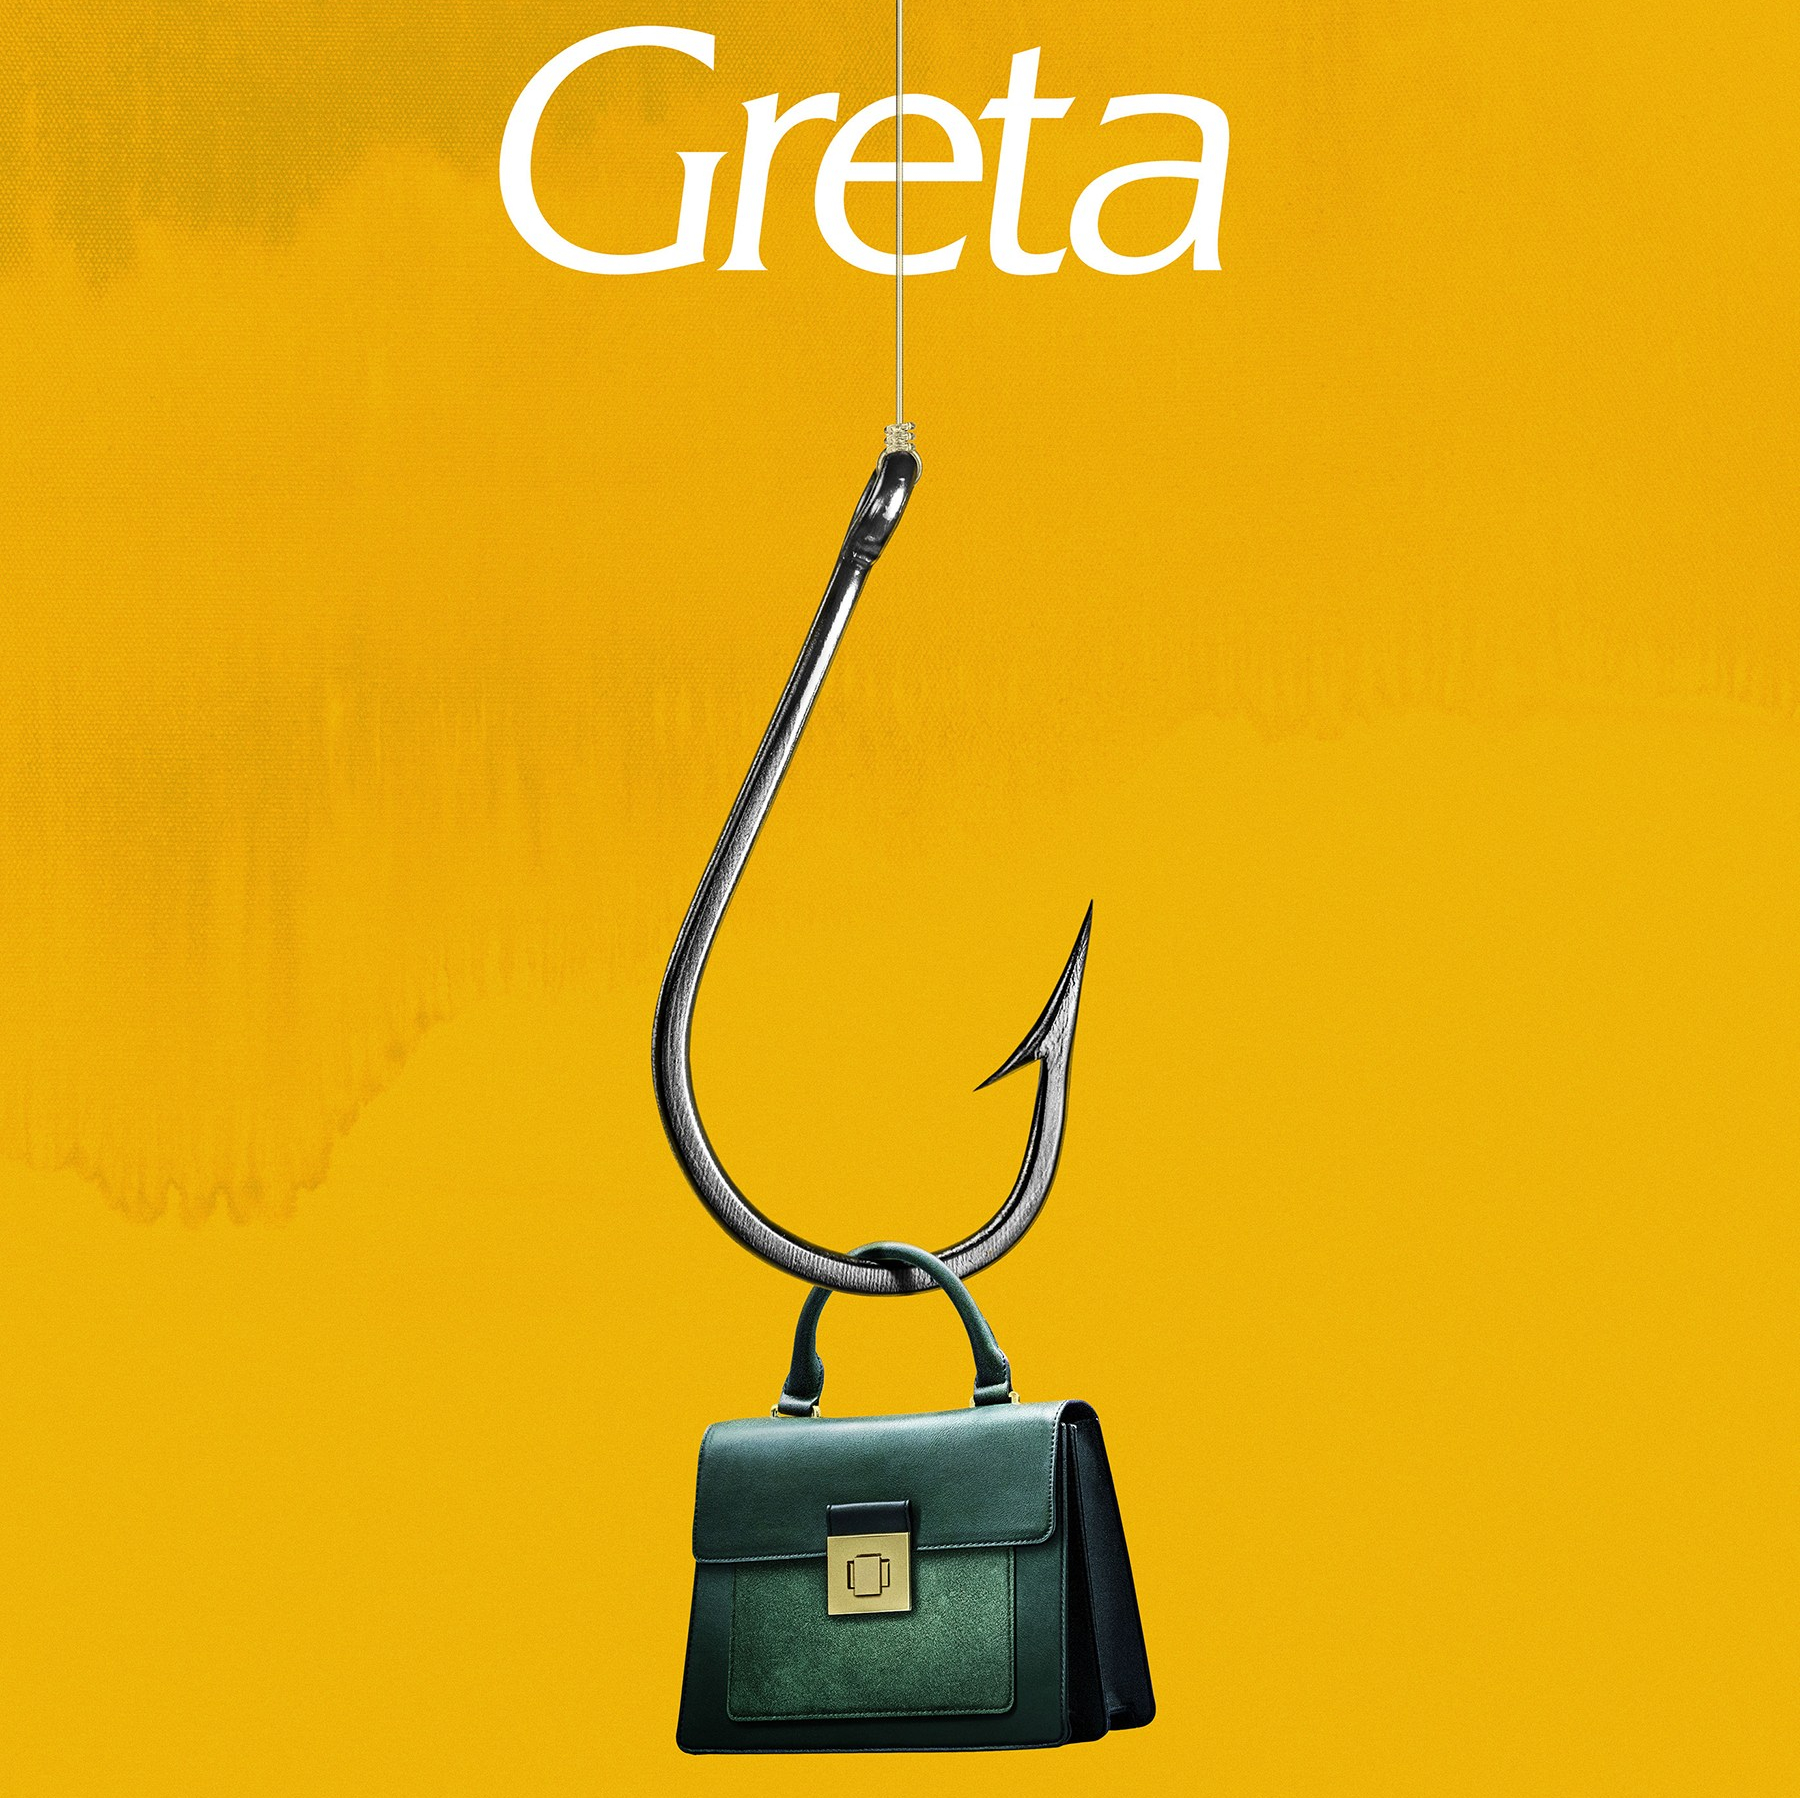 ‘Greta’ offers suspense through dark tale of stalking